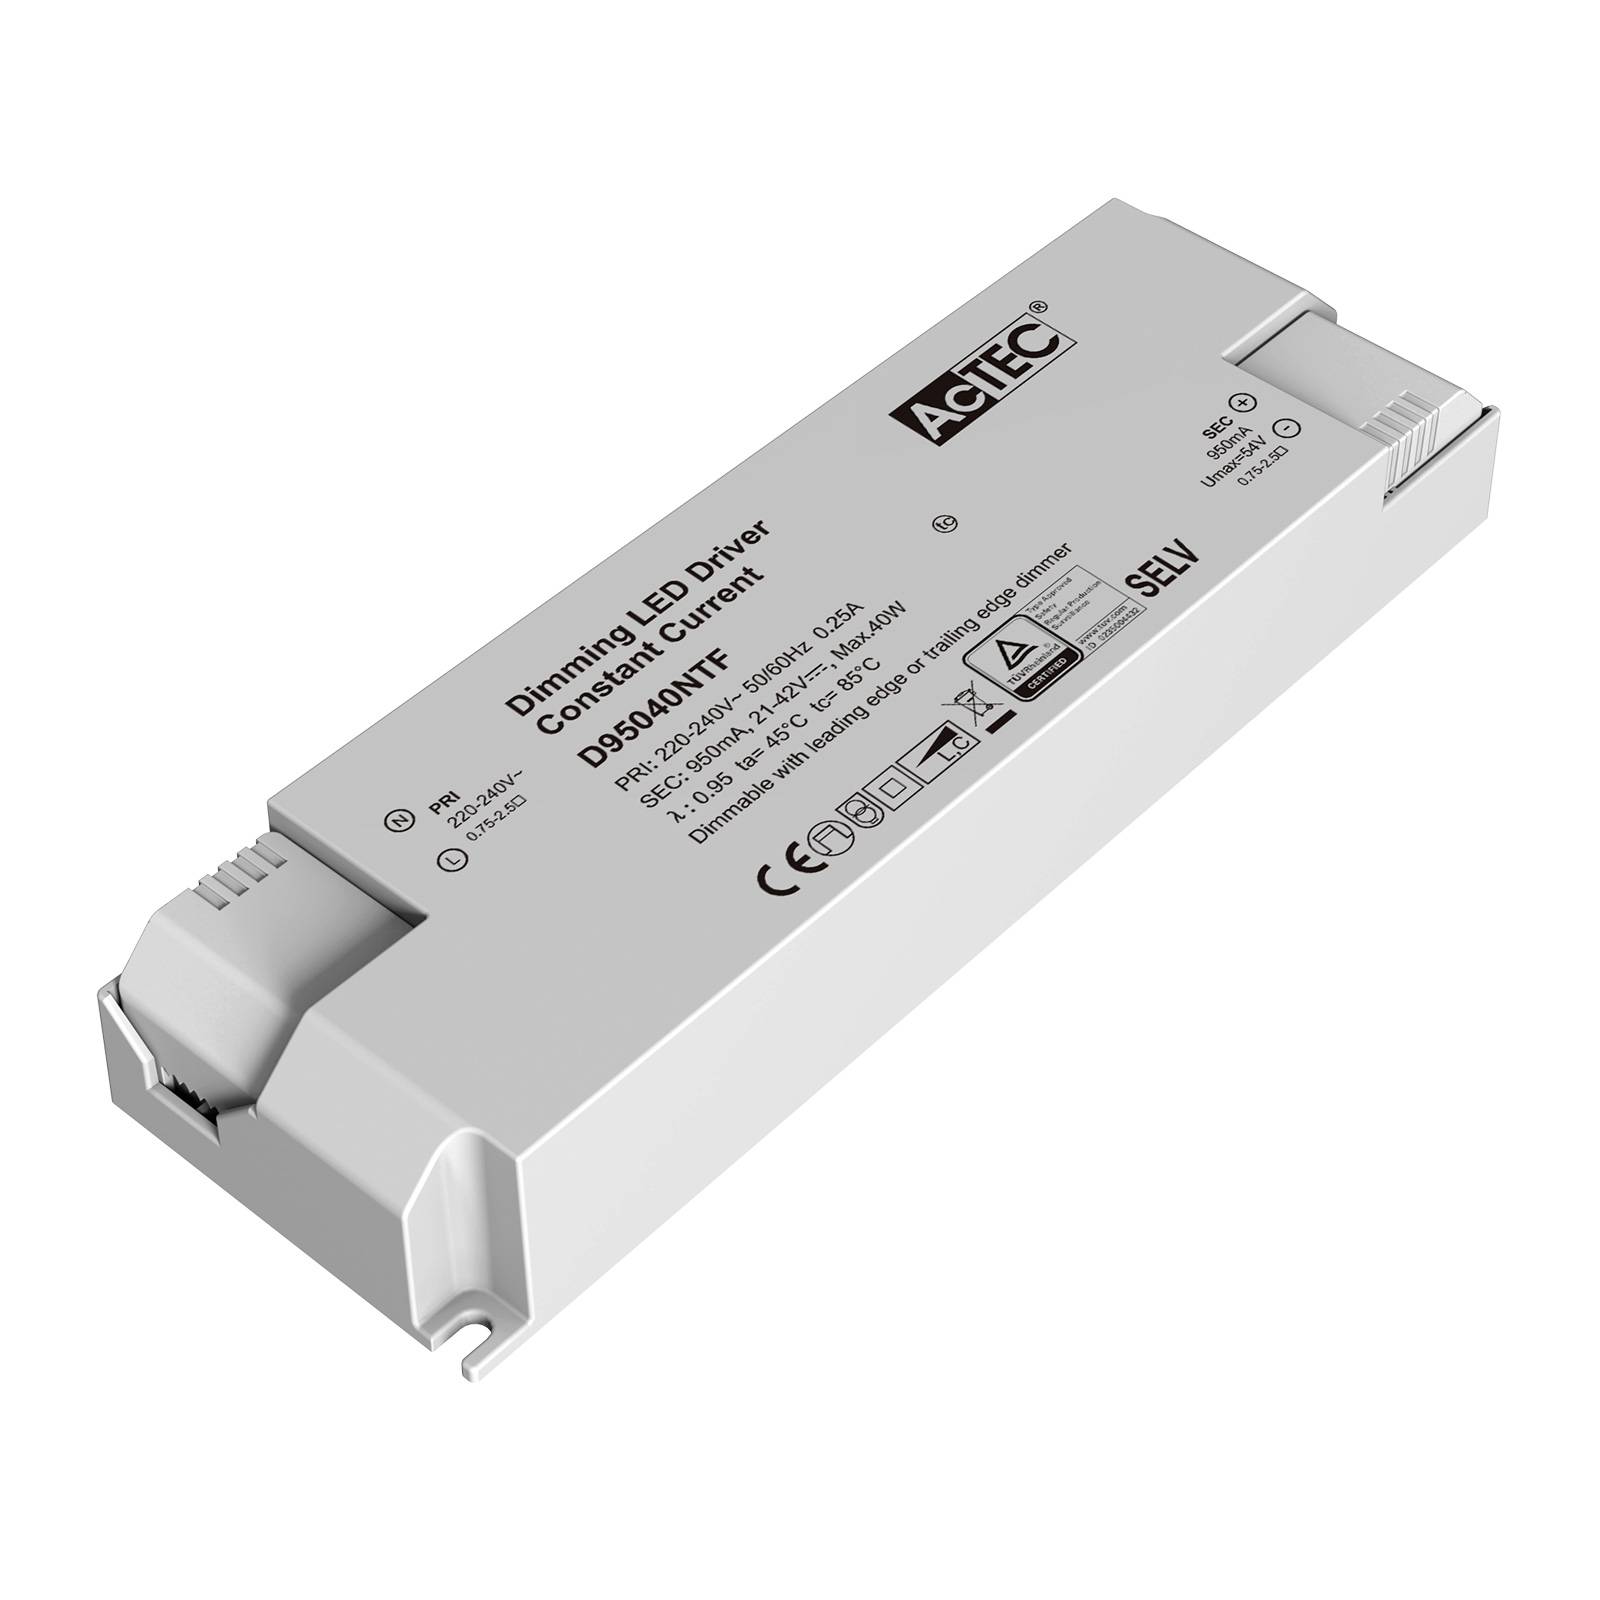 AcTEC Triac LED-drivdon CC max. 40W 950mA